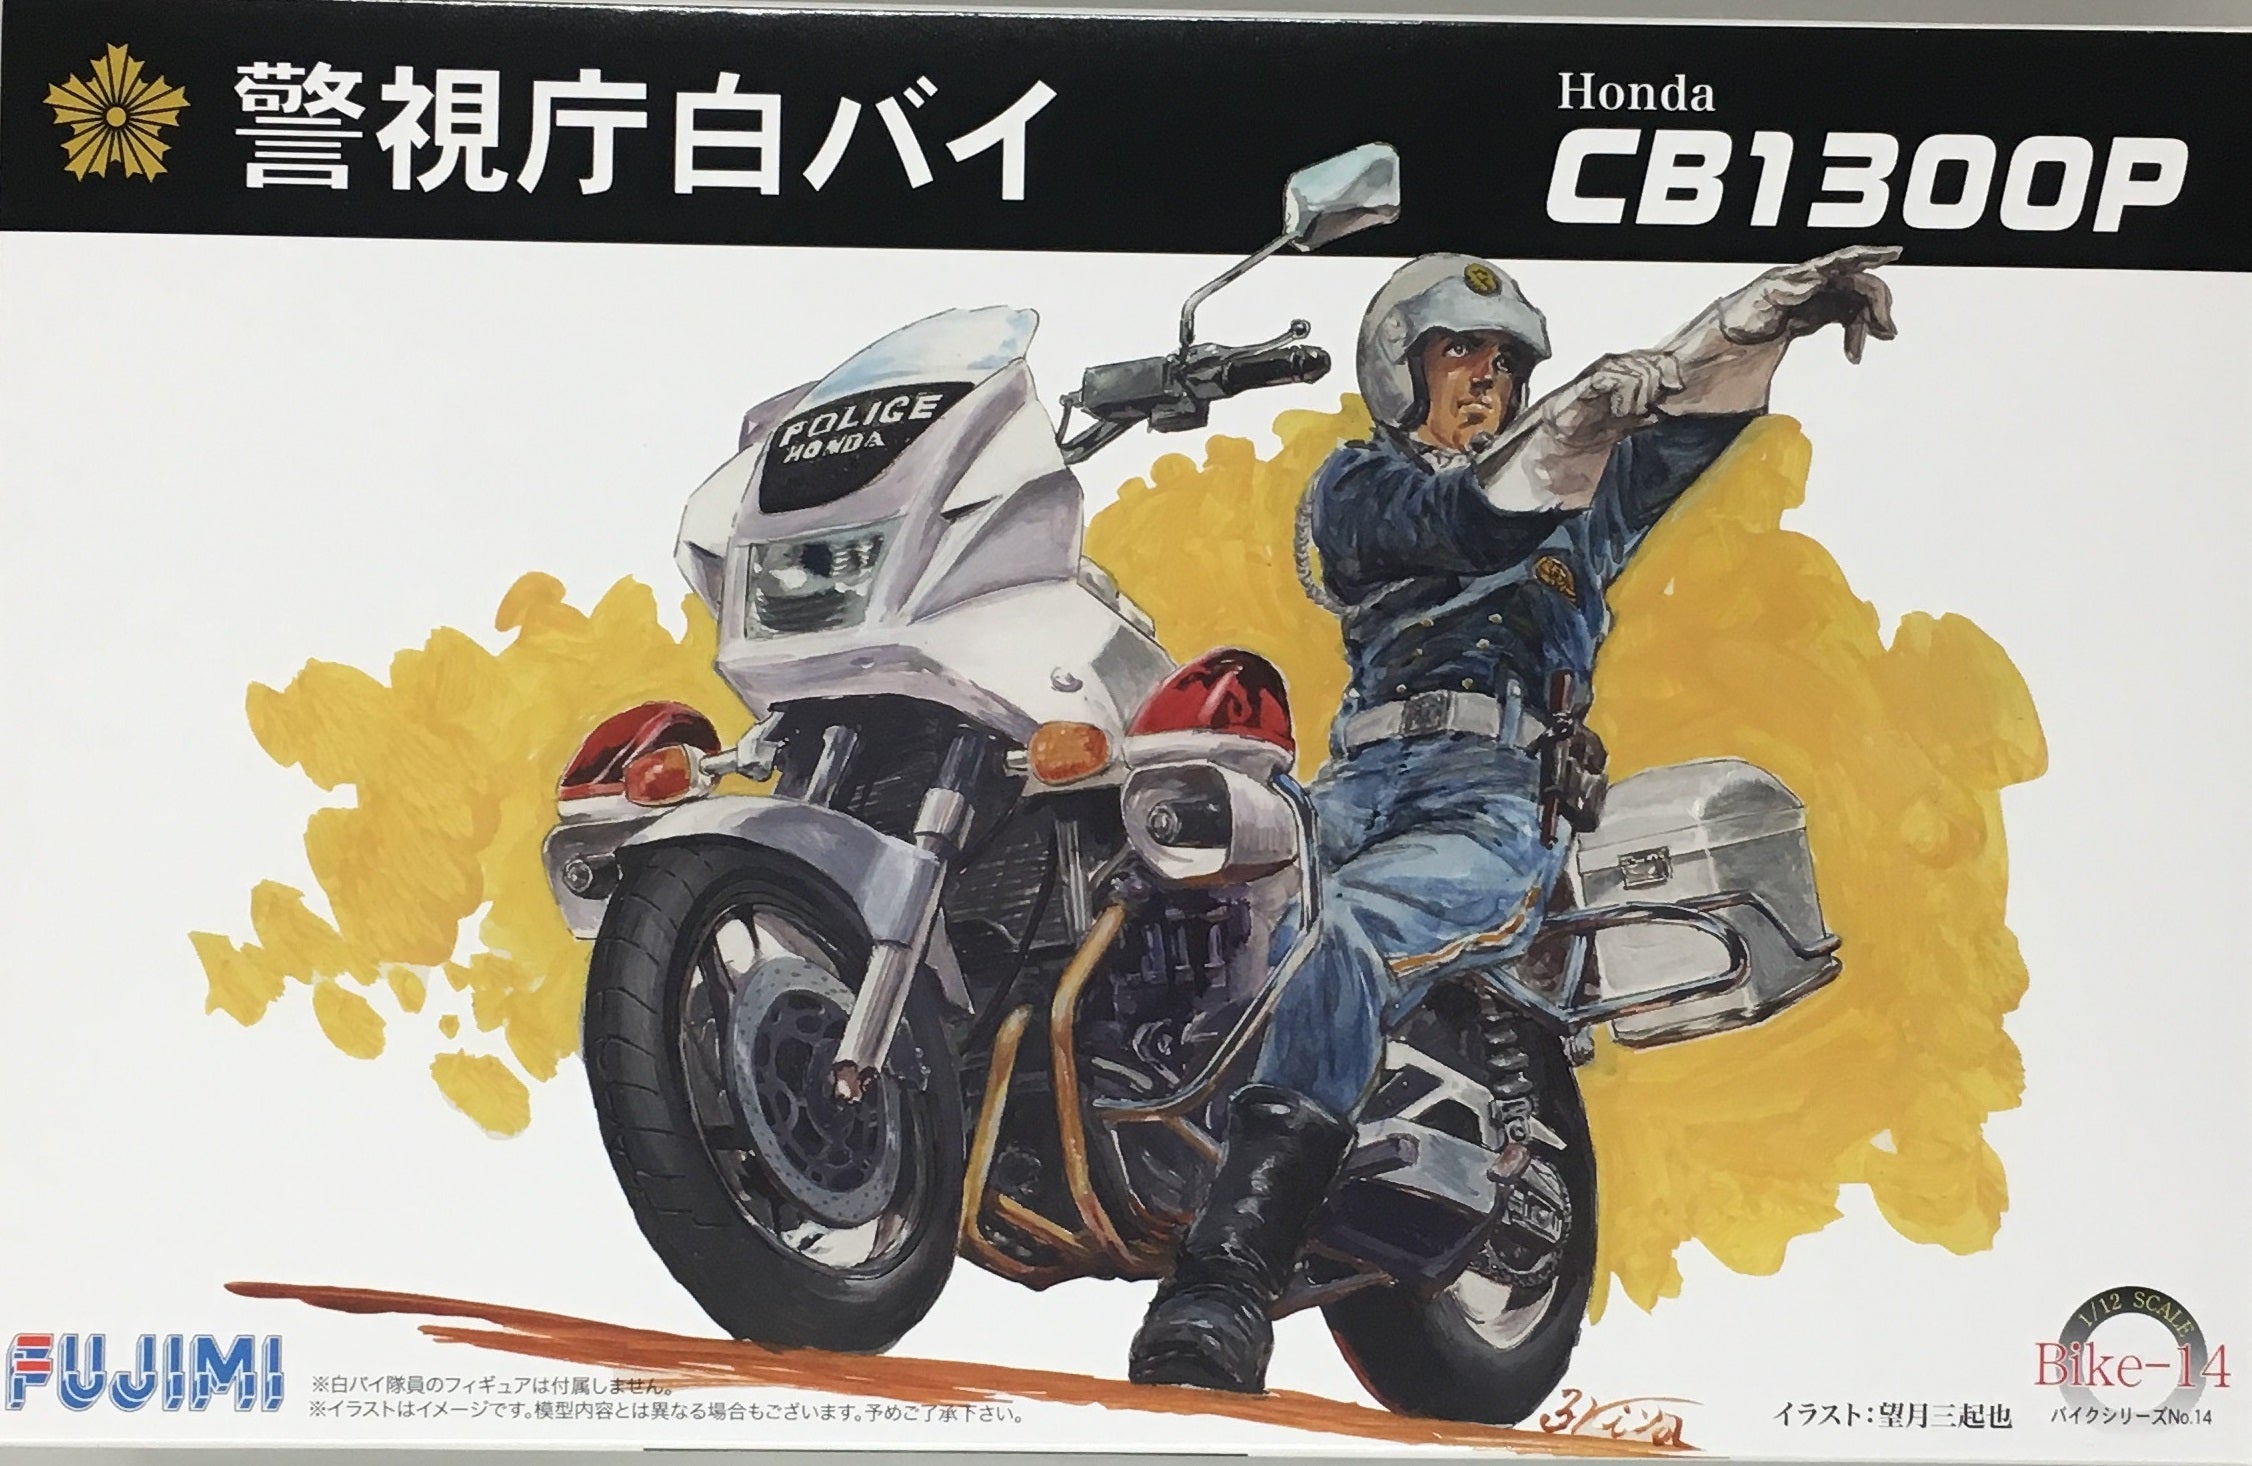 1/12 Honda CB1300P Motorcycle Police